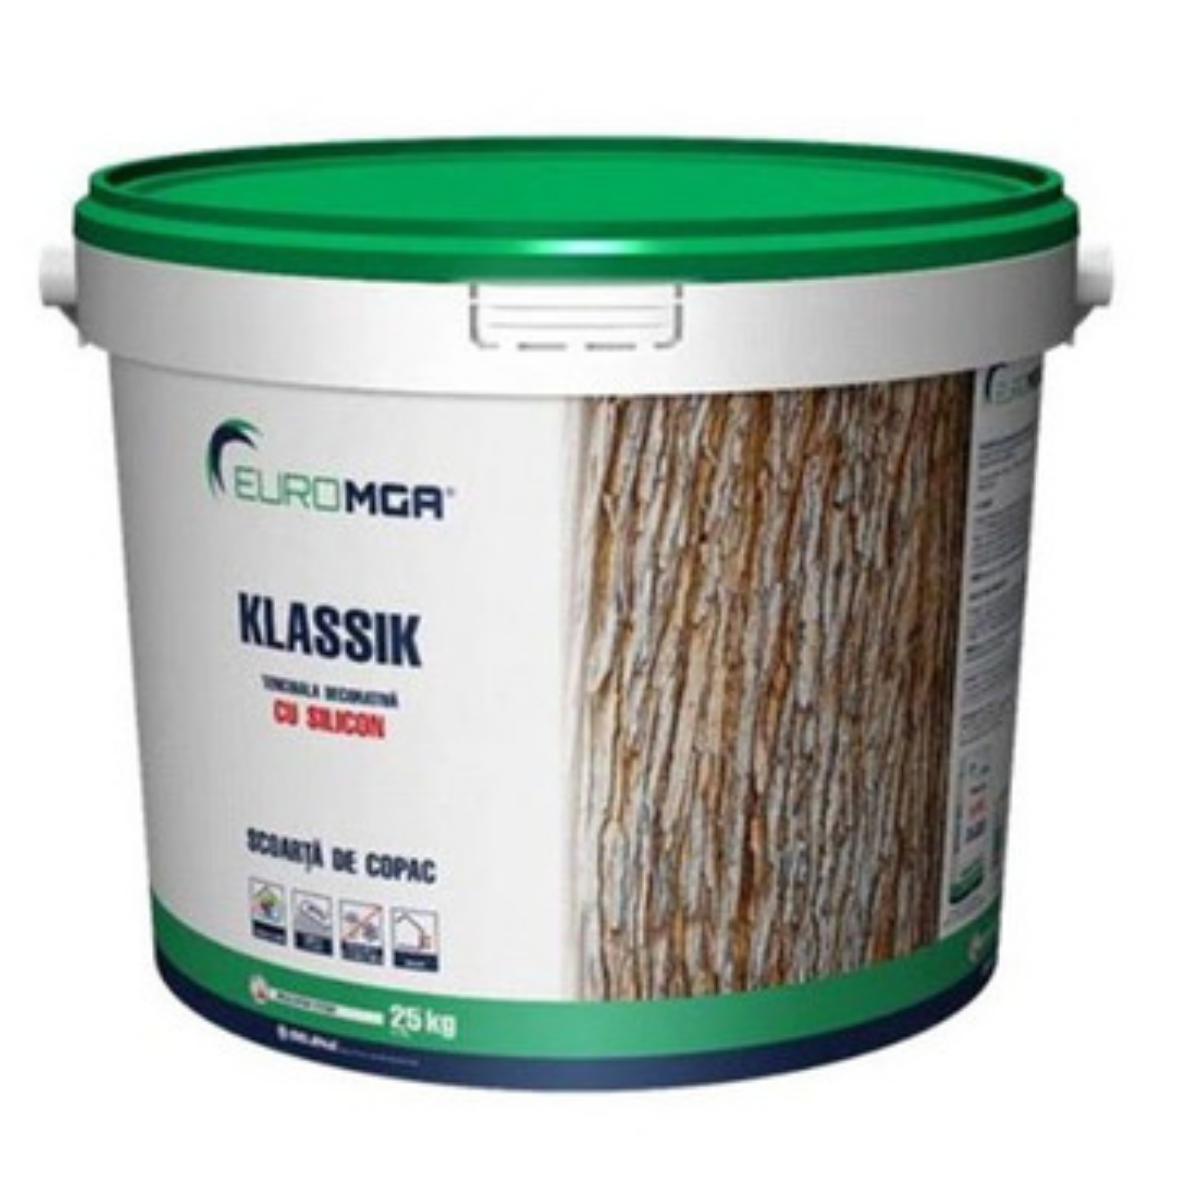 Decorative plasters - KLASSIK EuroMGA K15 25kg Silicone Decorative Plaster, https:maxbau.ro